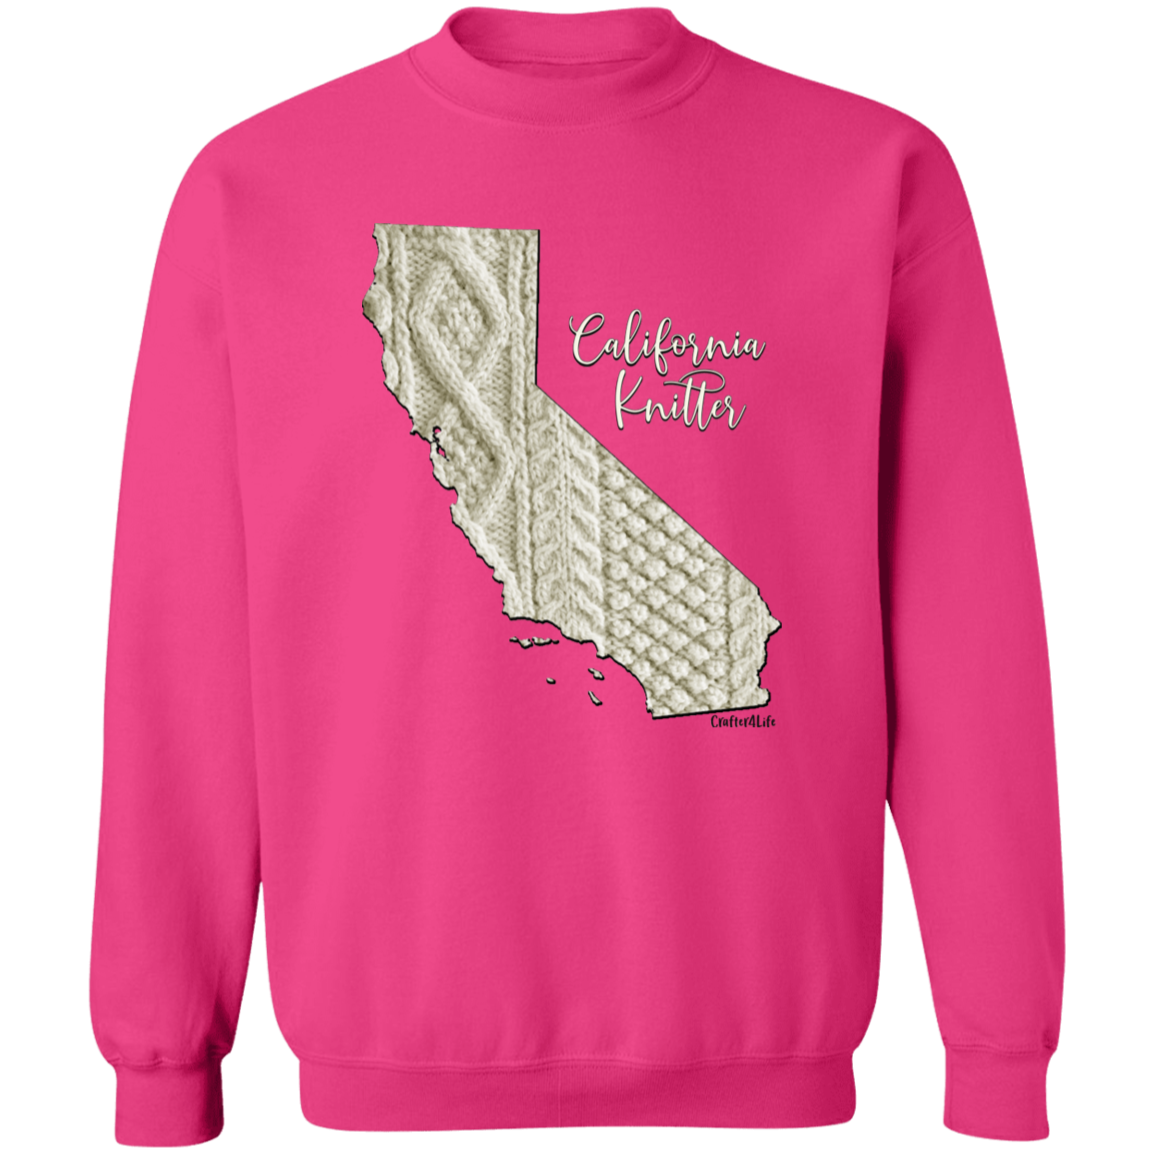 California Knitter Crewneck Pullover Sweatshirt